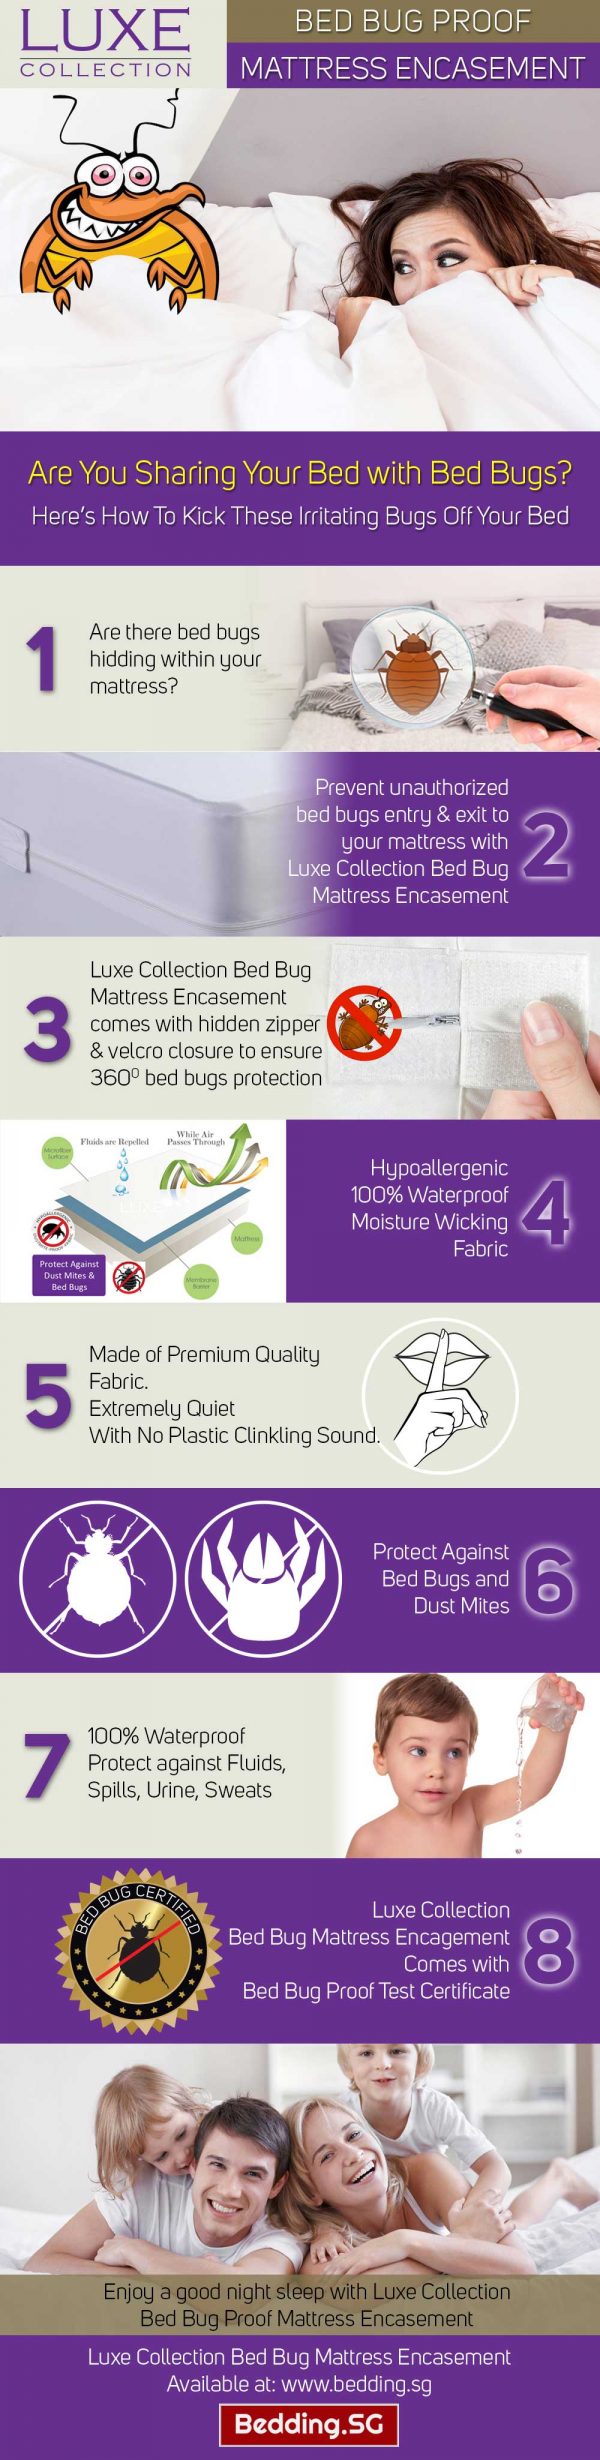 Luxe Collection Bed Bug Mattress Encasement